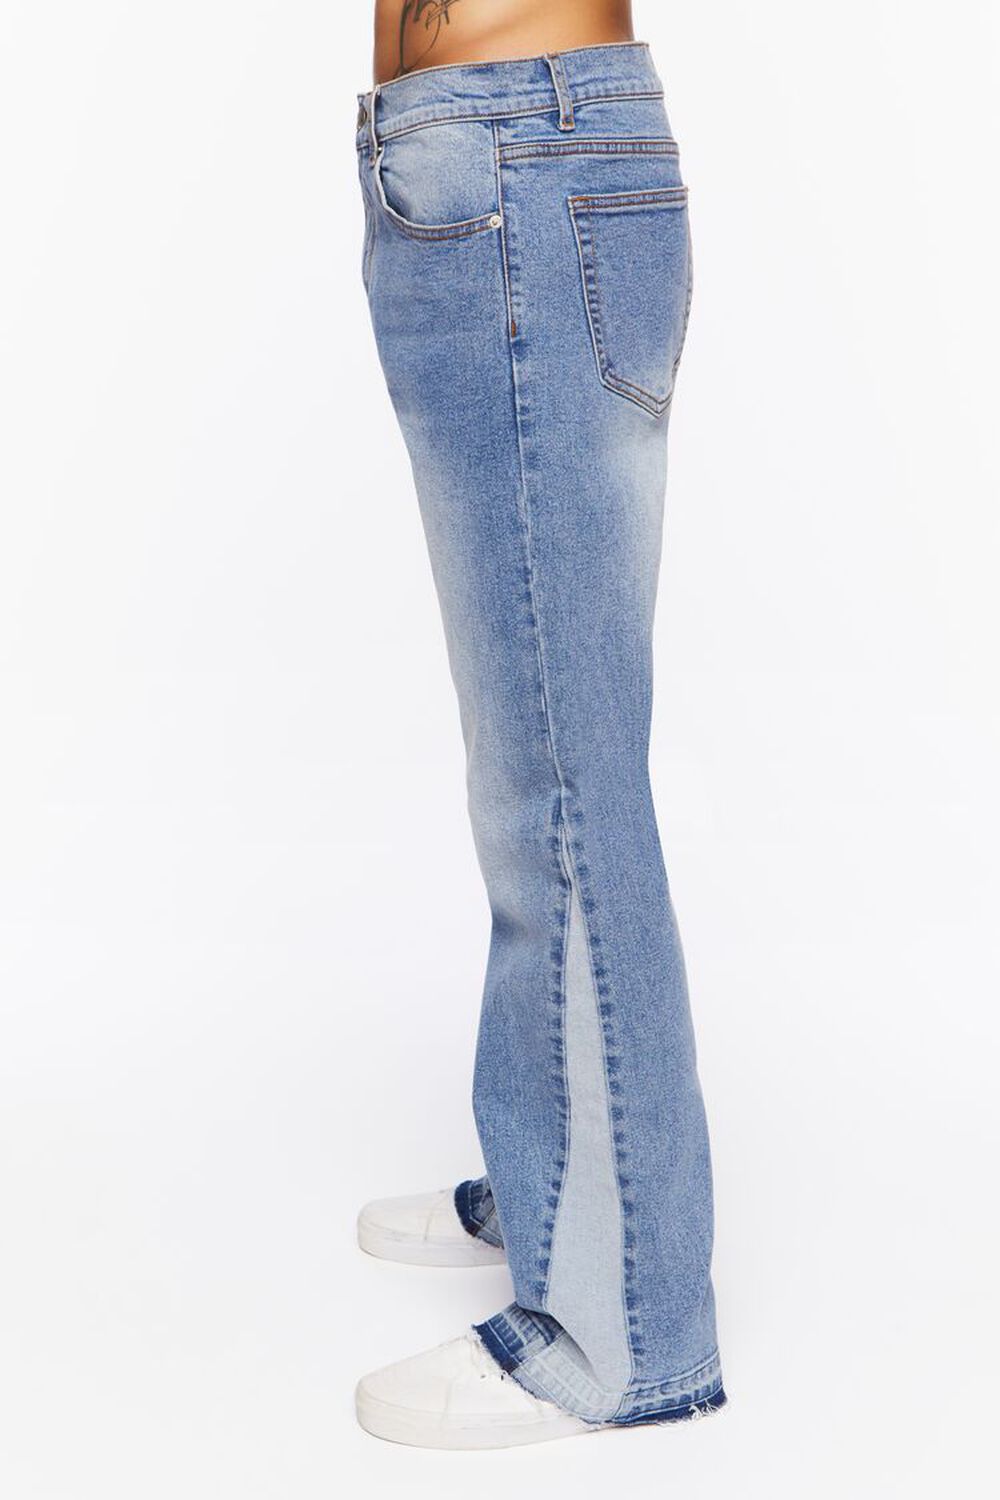 MEDIUM DENIM Stone Wash Flare Jeans, image 3